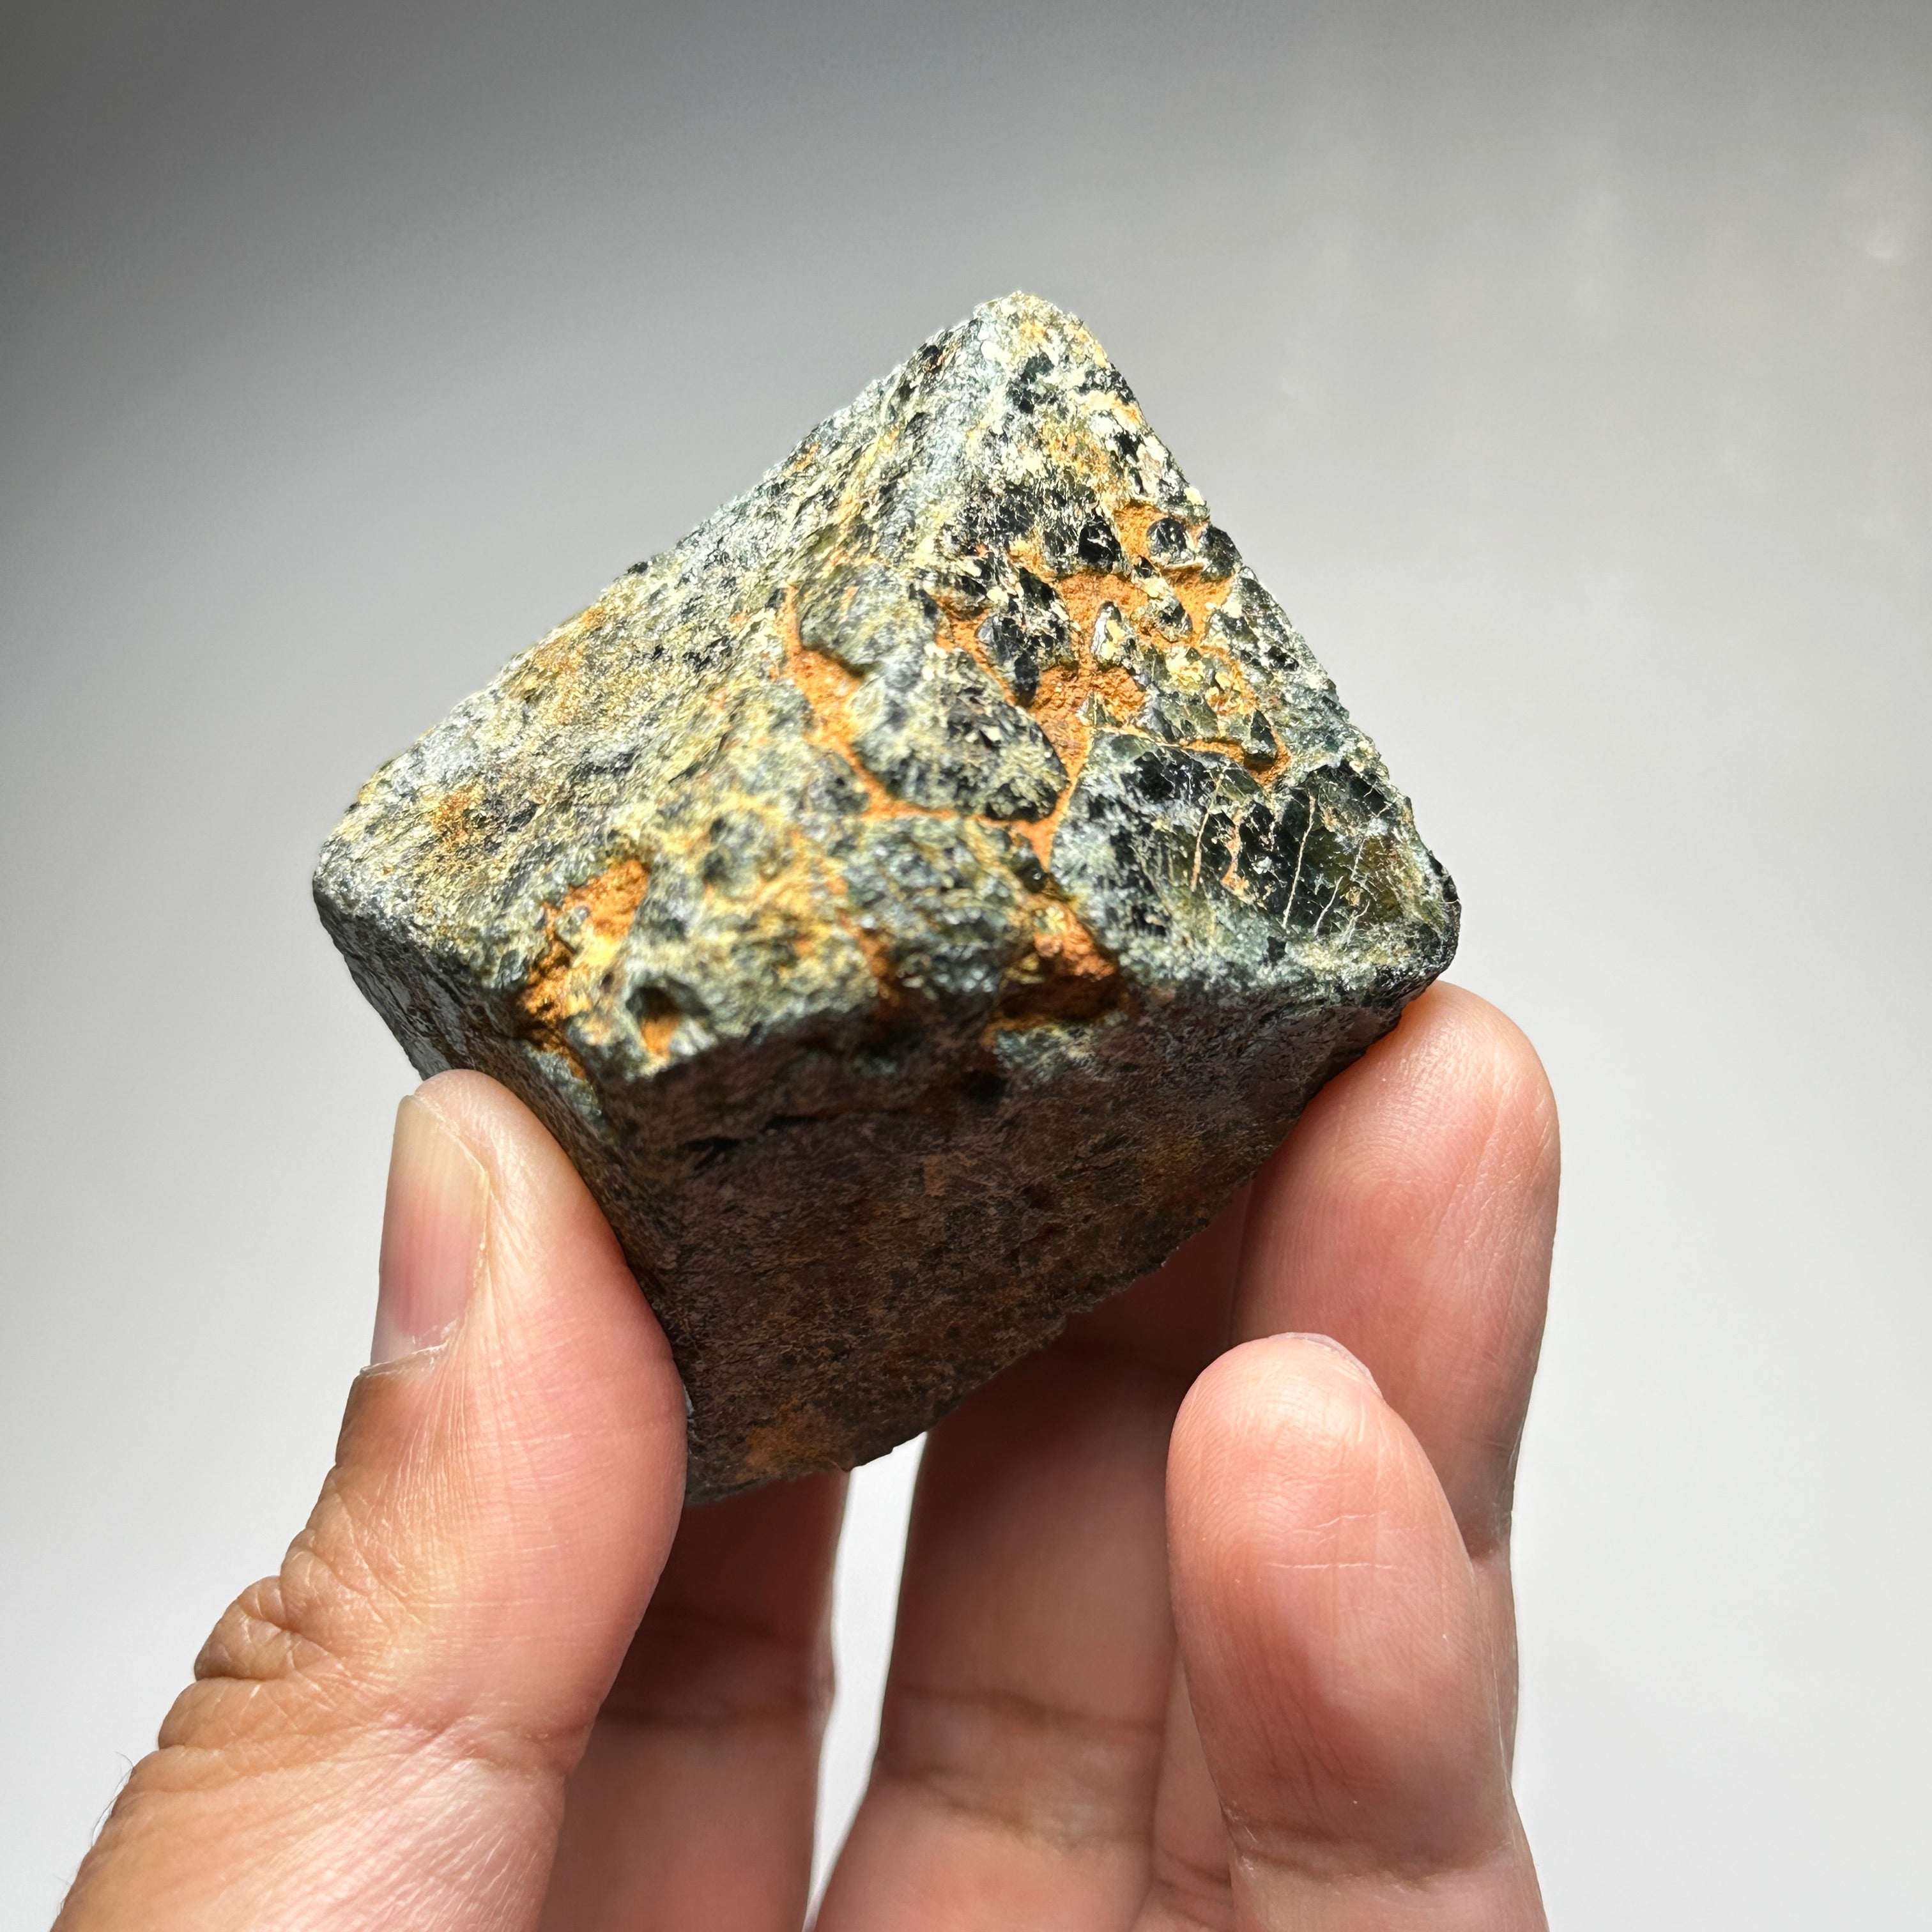 205.40gm / 1027.00ct Black Spinel Crystal, 56 x 47 x 47mm, Untreated Unheated, Mahenge, Tanzania